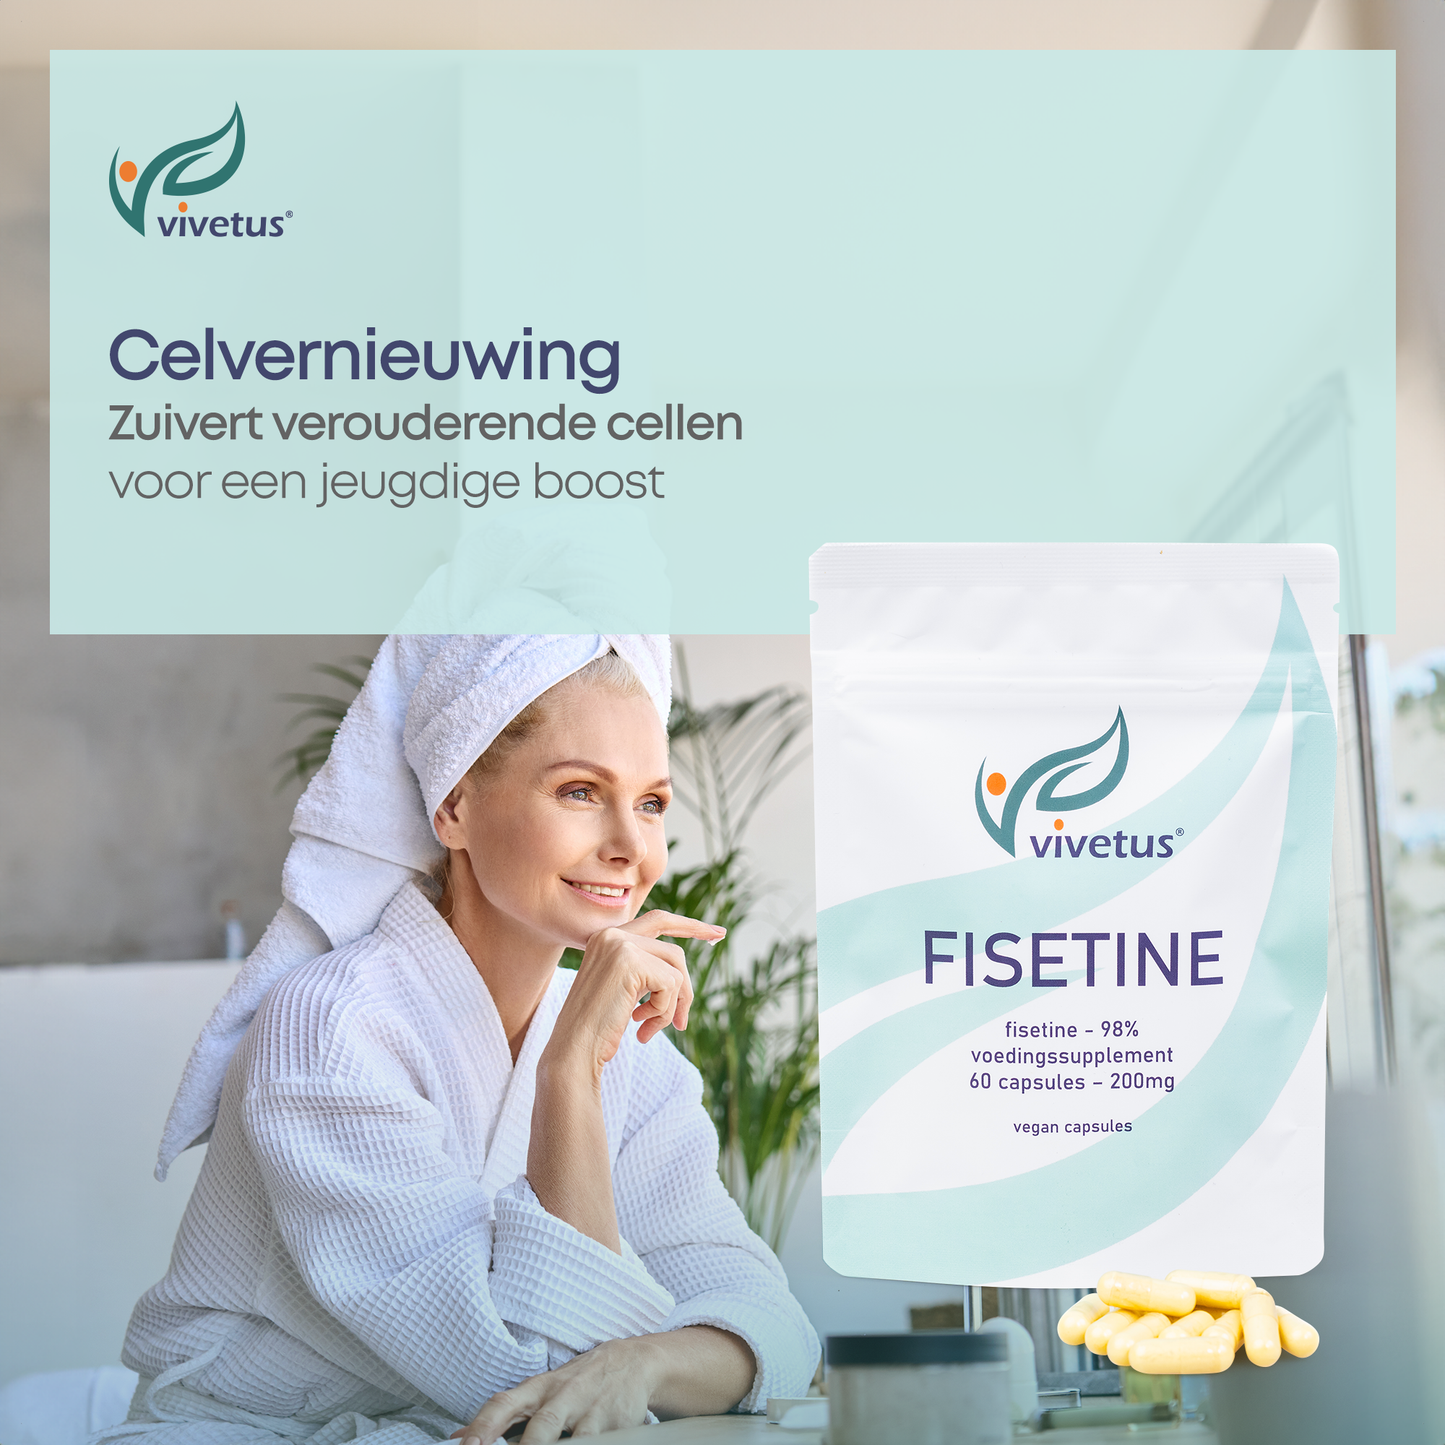 Vivetus® Fisetine - 60 capsules - 200mg